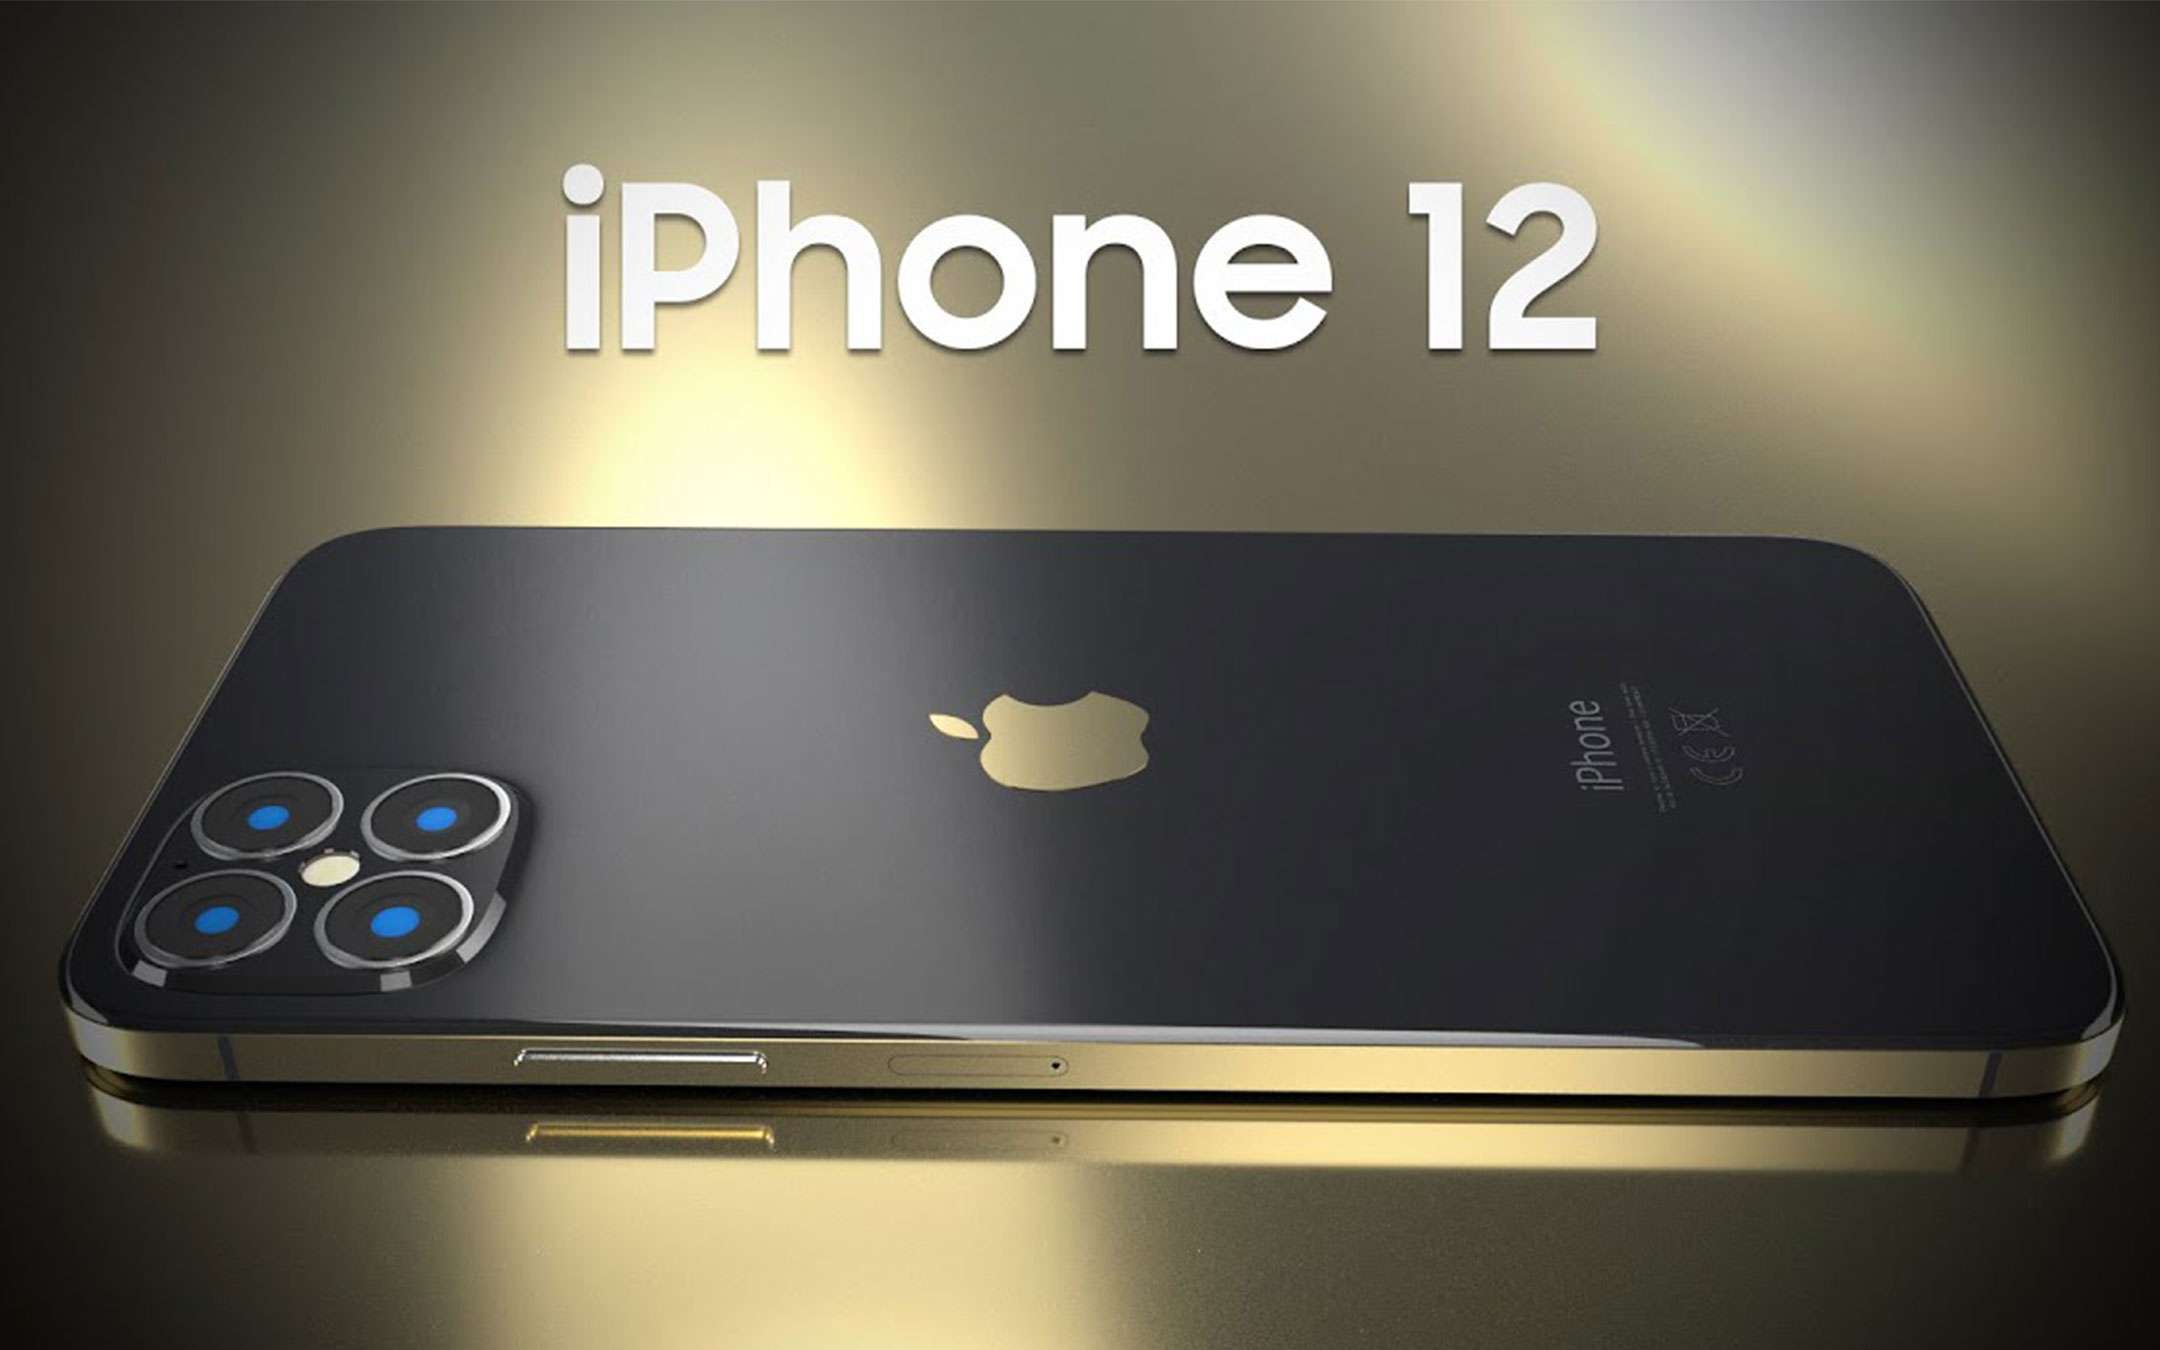 iPhone 12 avrà l’atteso sensore ToF, era ora